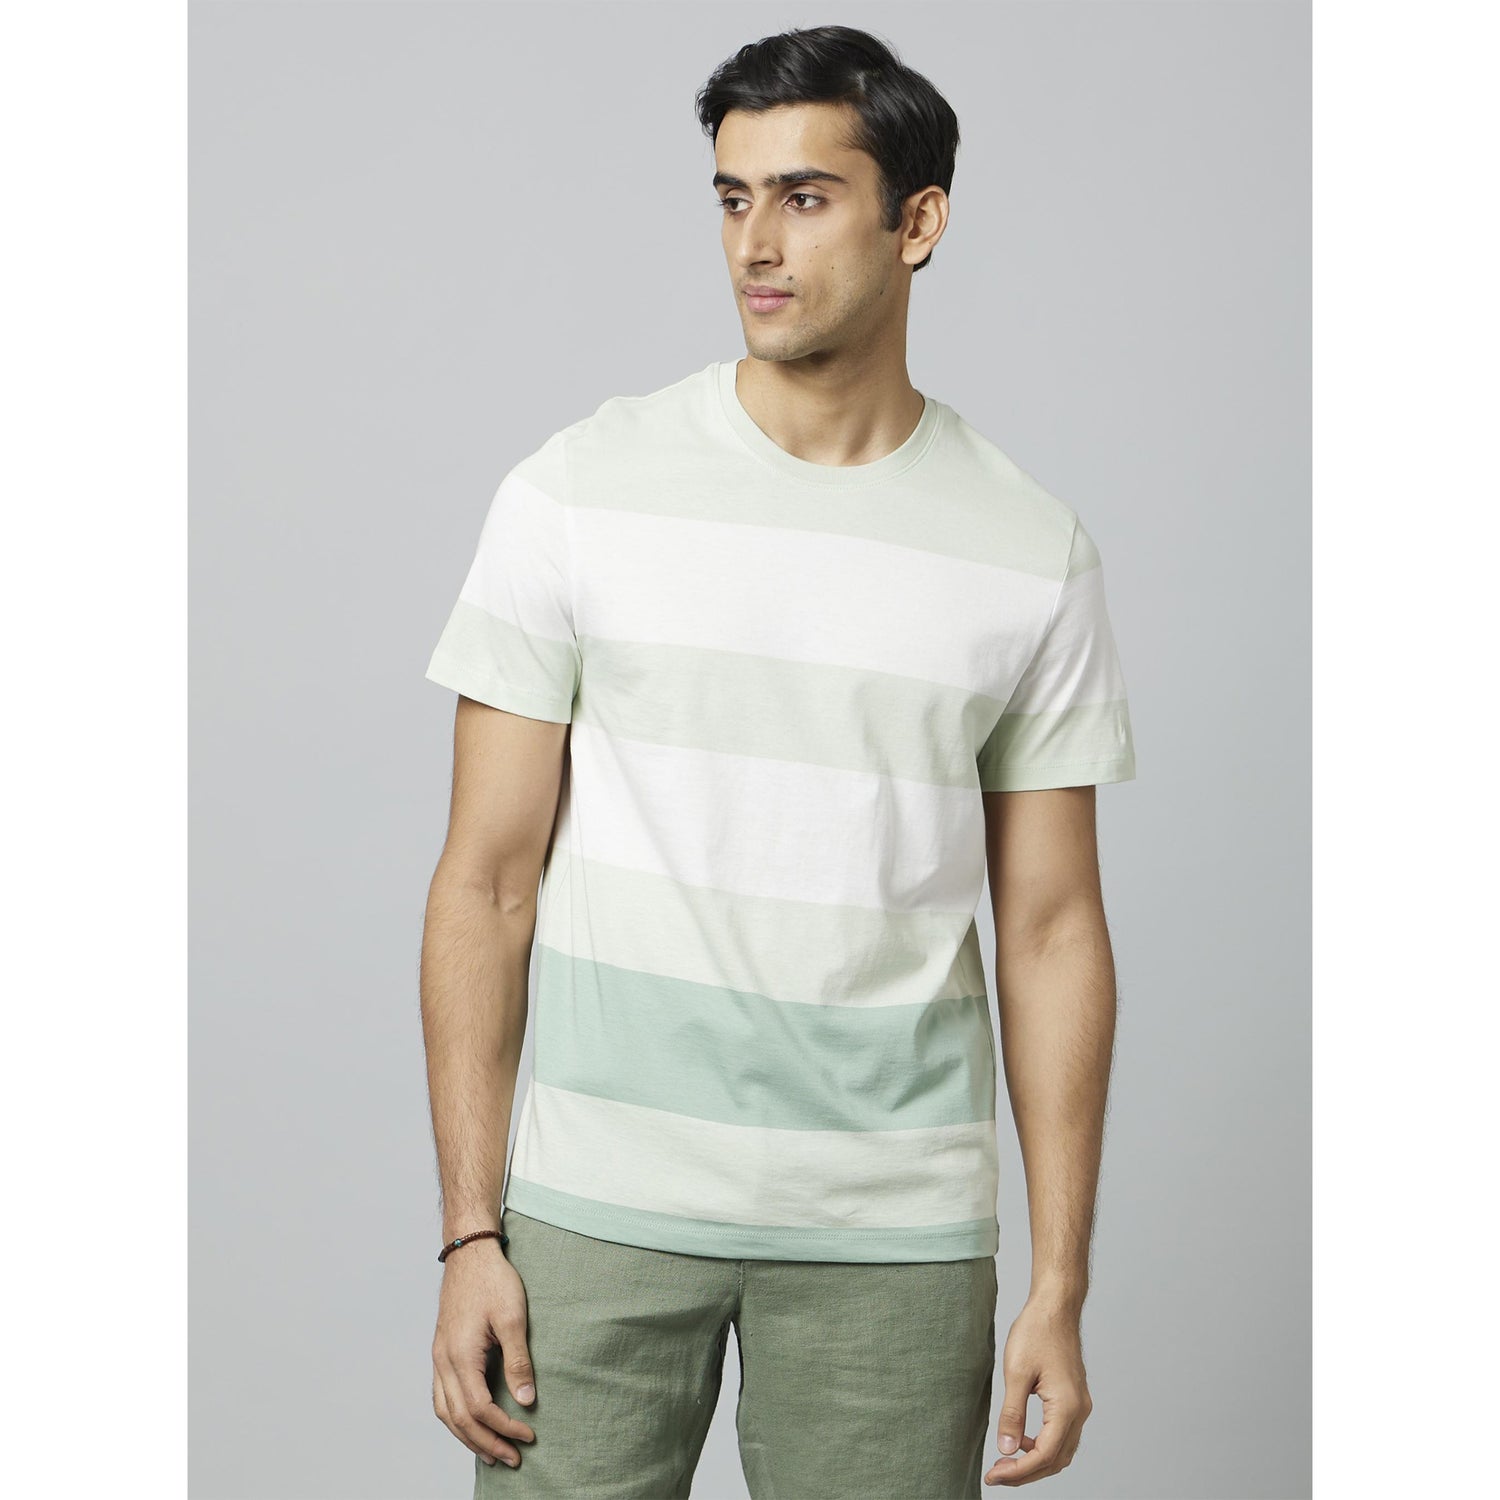 Striped Green Short Sleeves Round Neck Tshirt